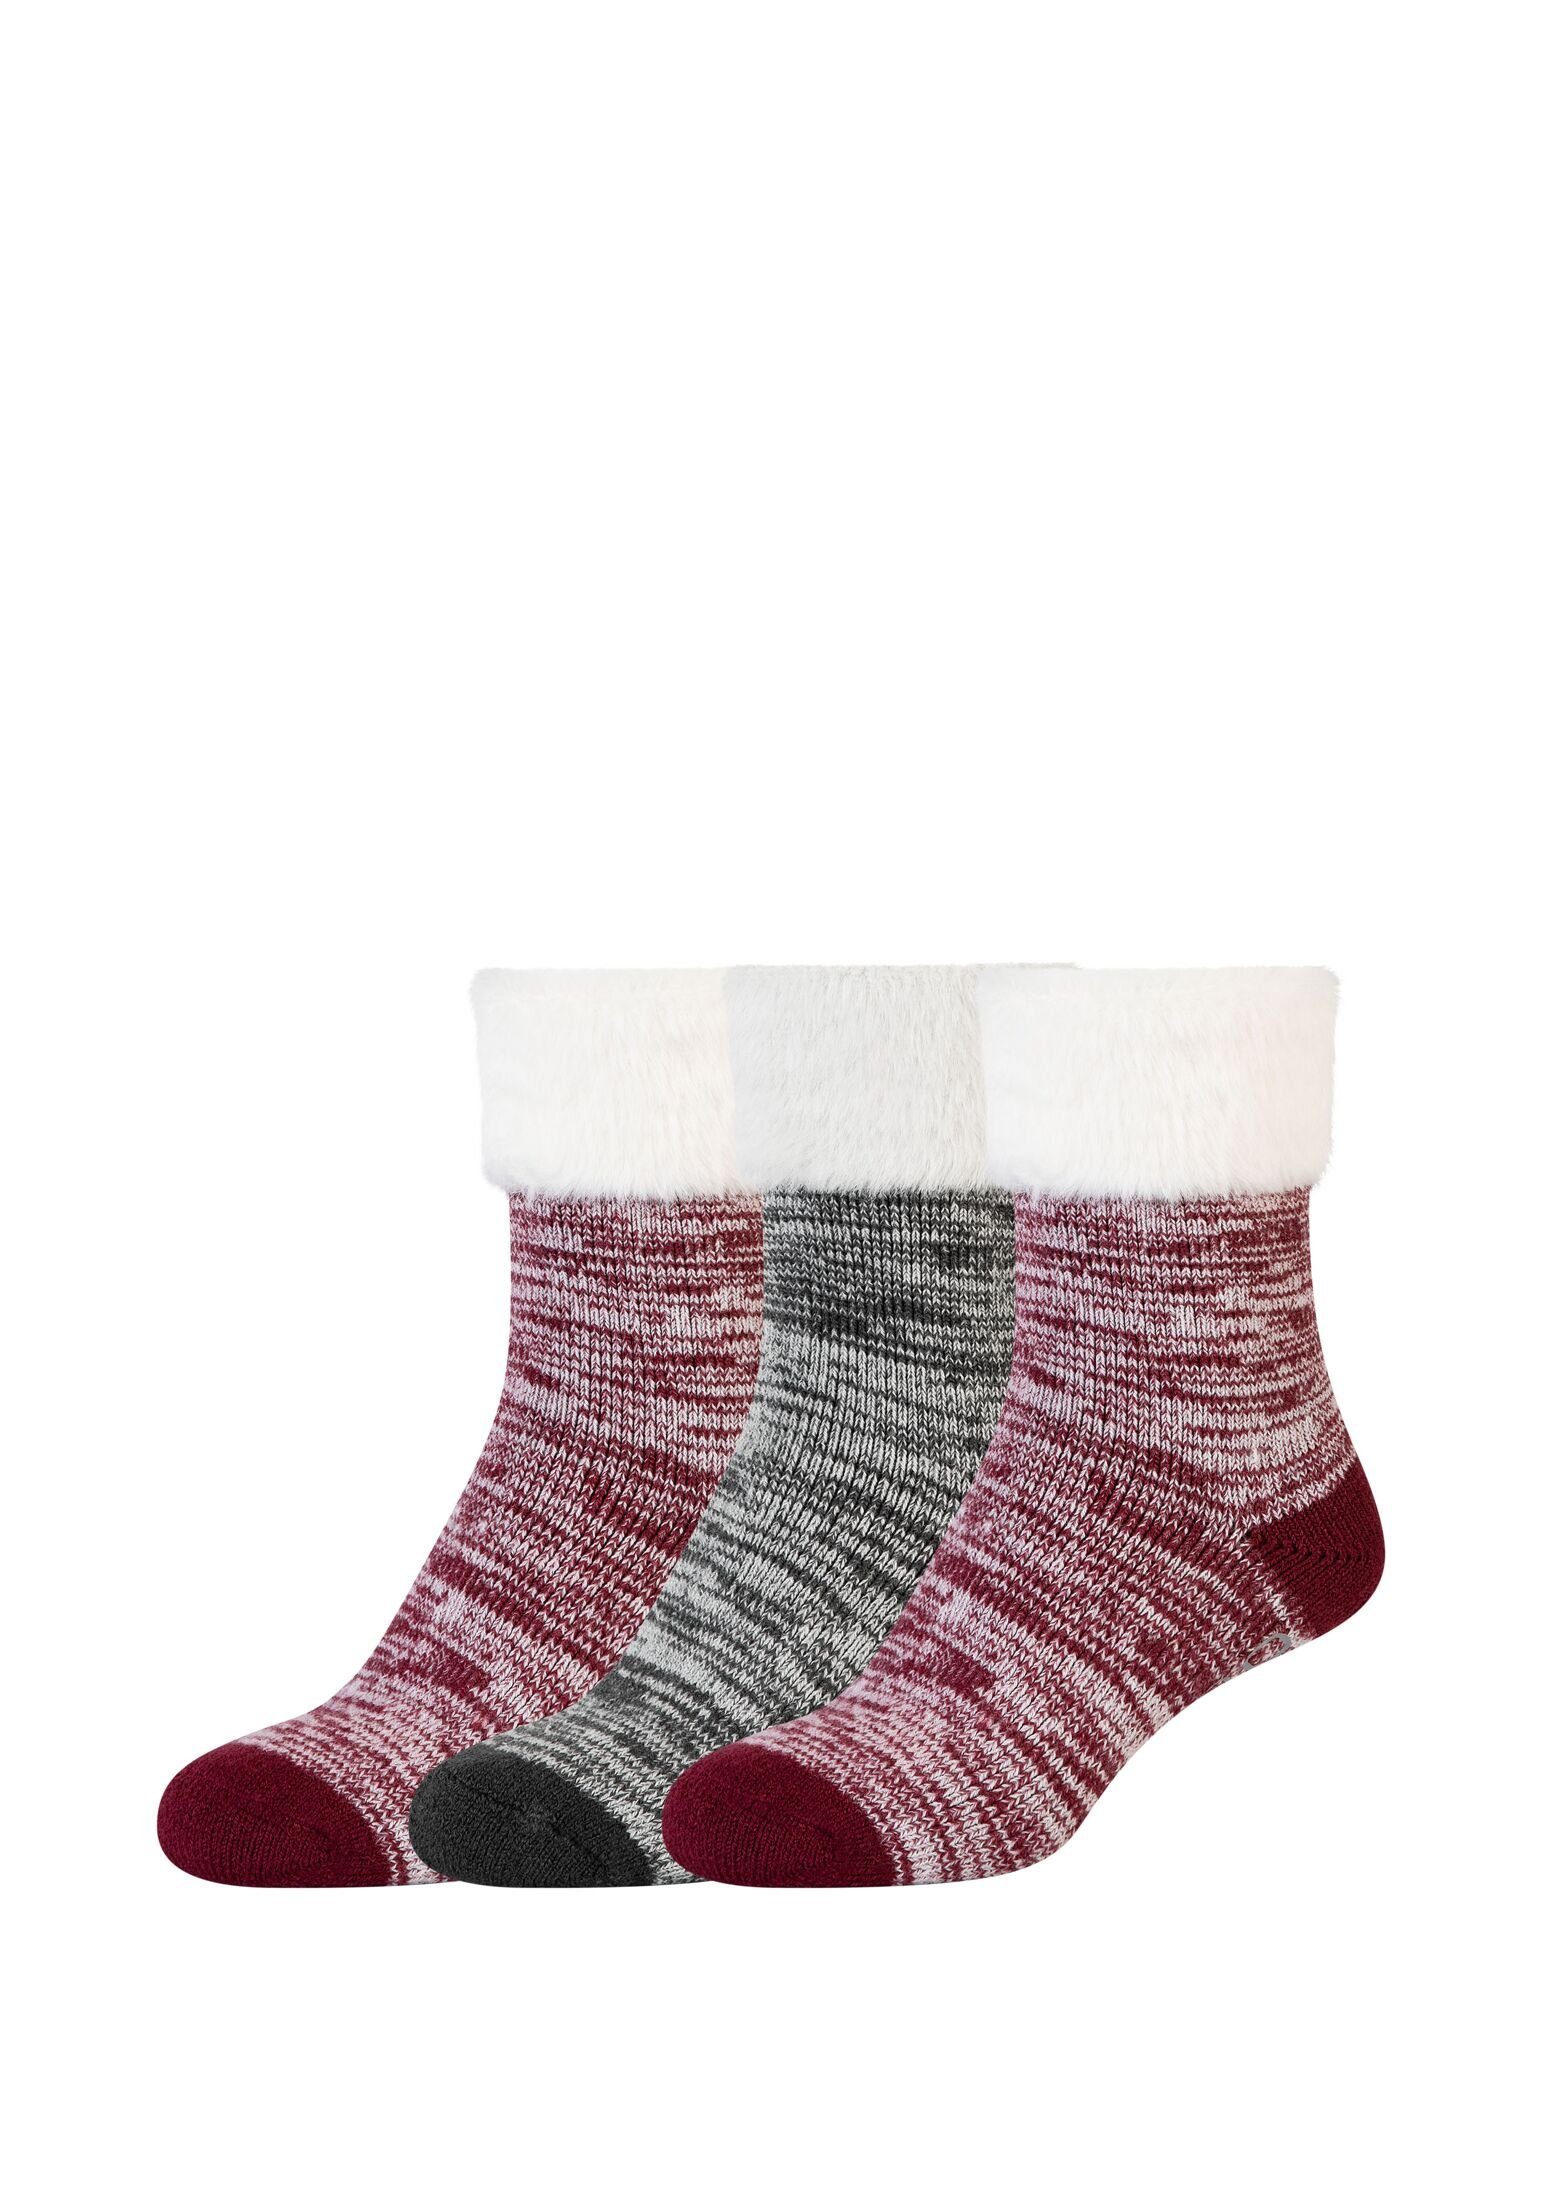 Camano Socken Socken 3er Pack, softem aus gefertigt Angenehm wärmendem, Mischgewebe